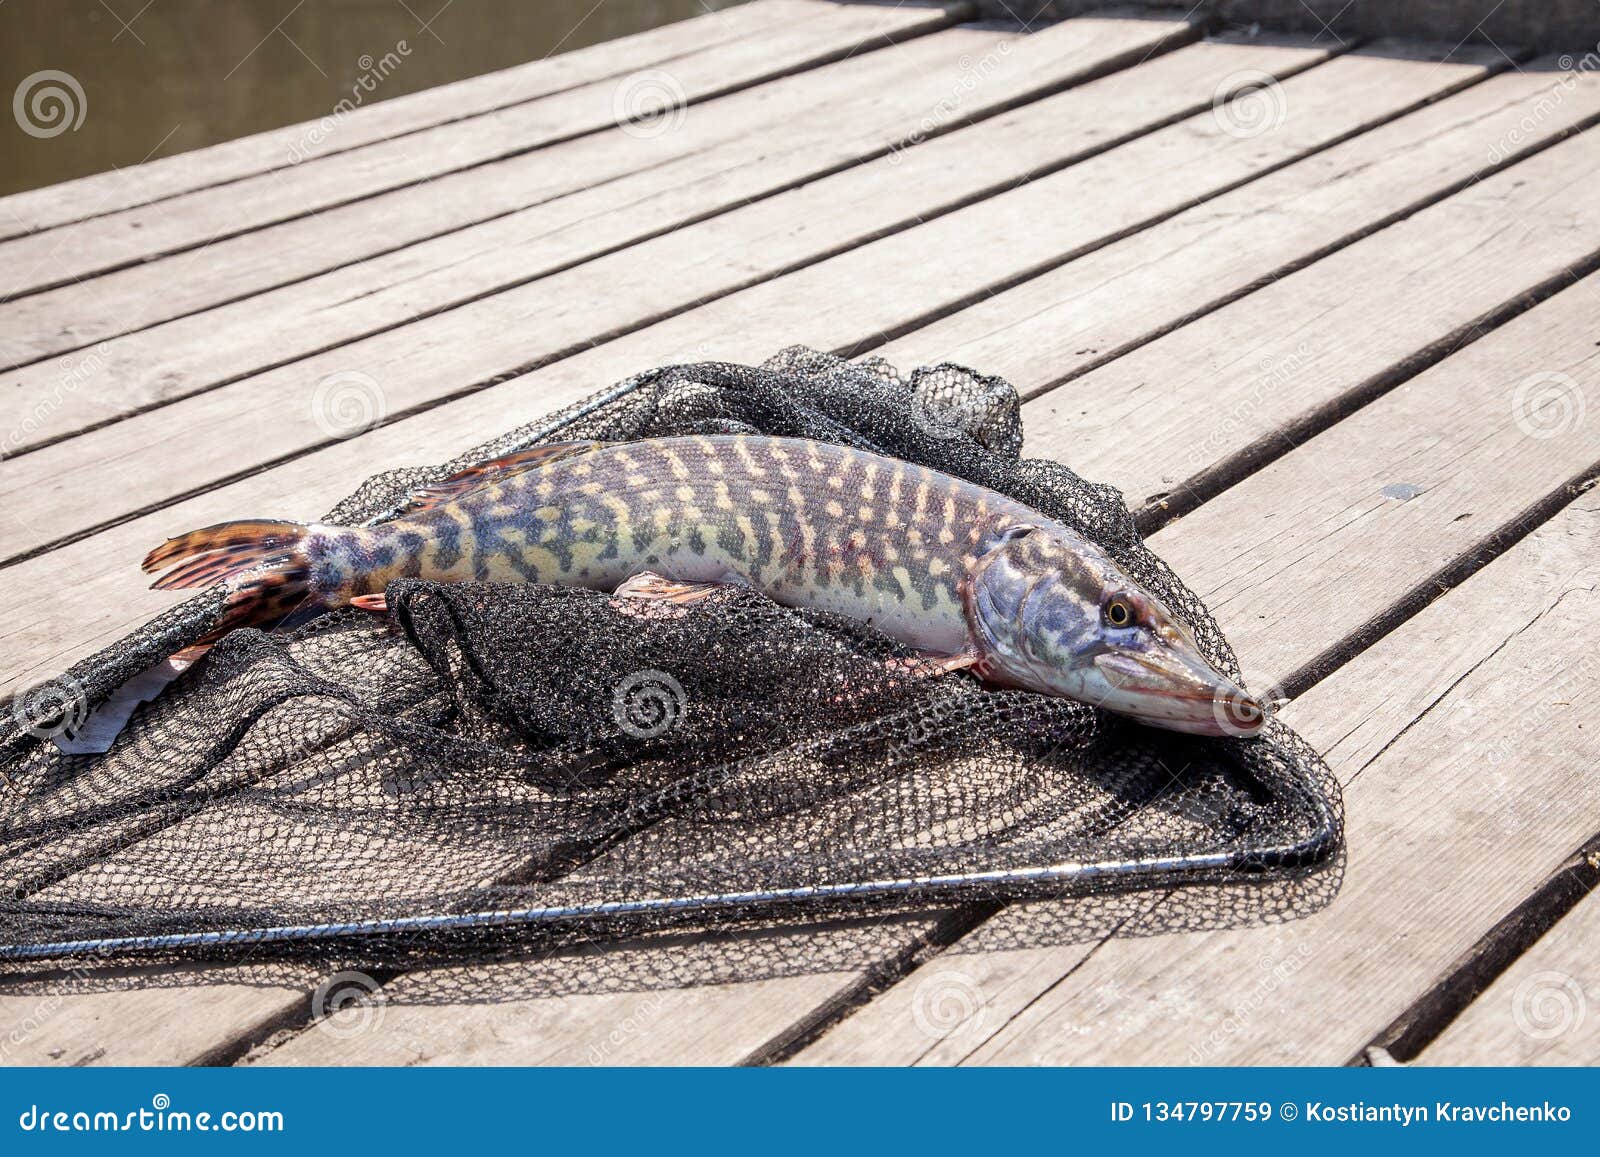 https://thumbs.dreamstime.com/z/trophy-fishing-big-freshwater-pike-lies-black-fishing-net-freshwater-northern-pike-fish-know-as-esox-lucius-lying-black-134797759.jpg